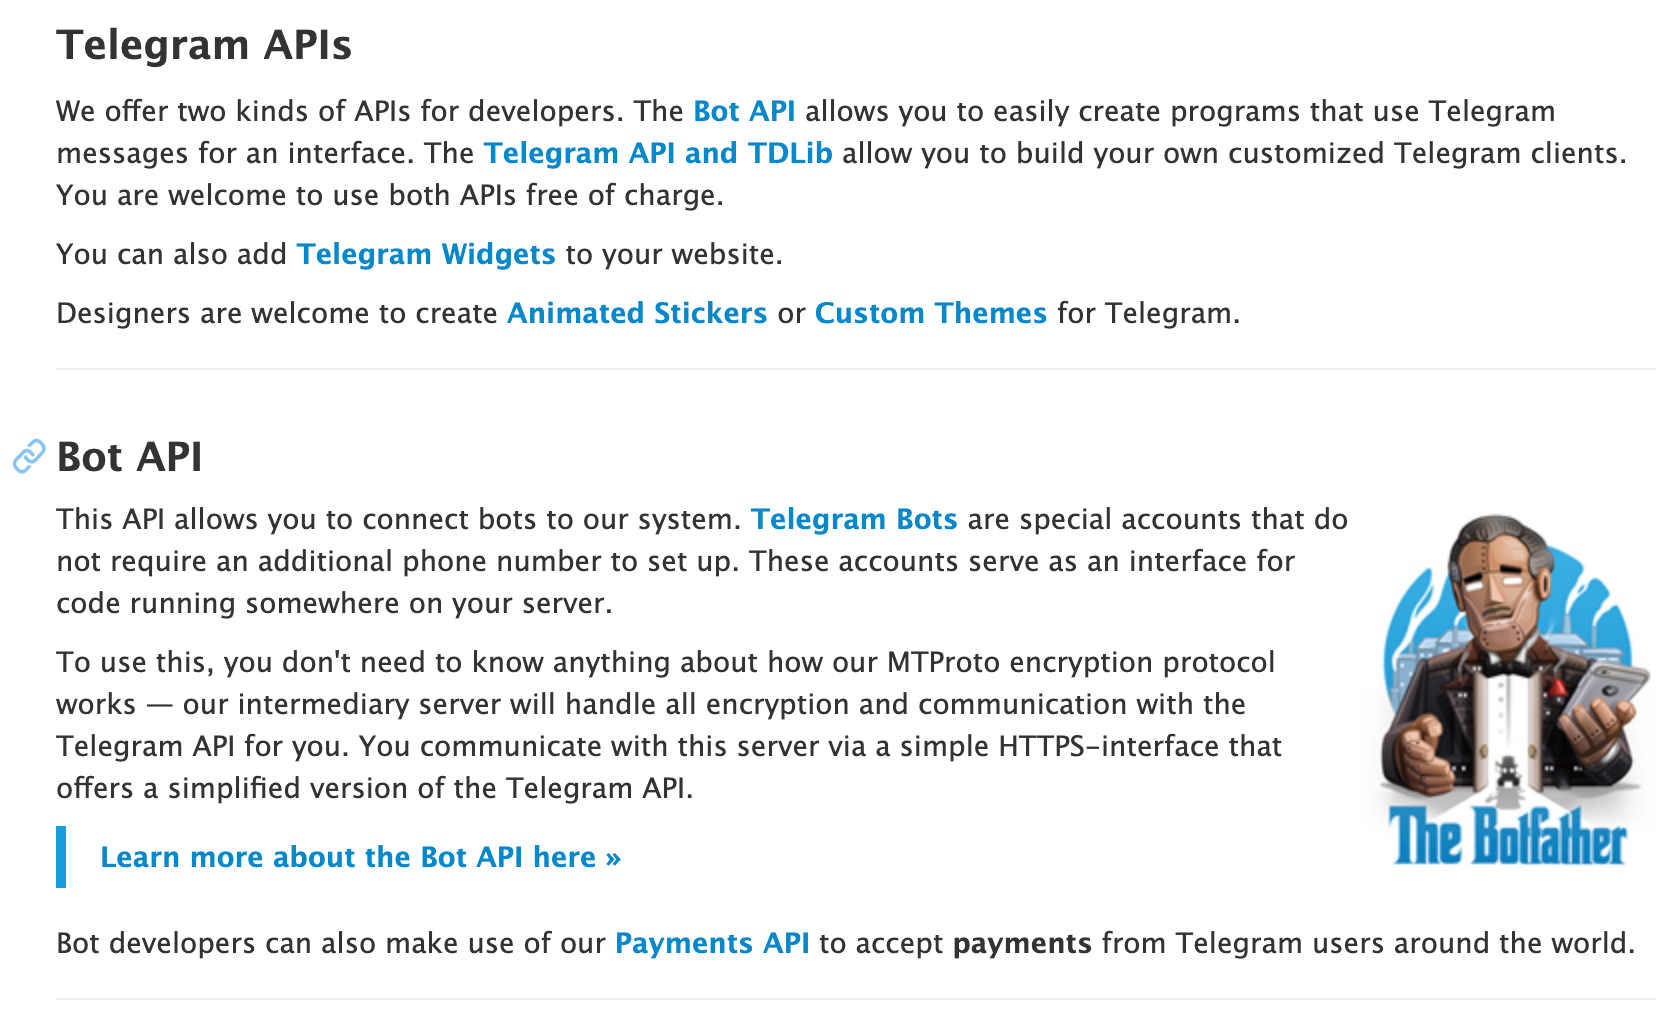 The true magic unfolds in Telegram's open API and bot capabilities